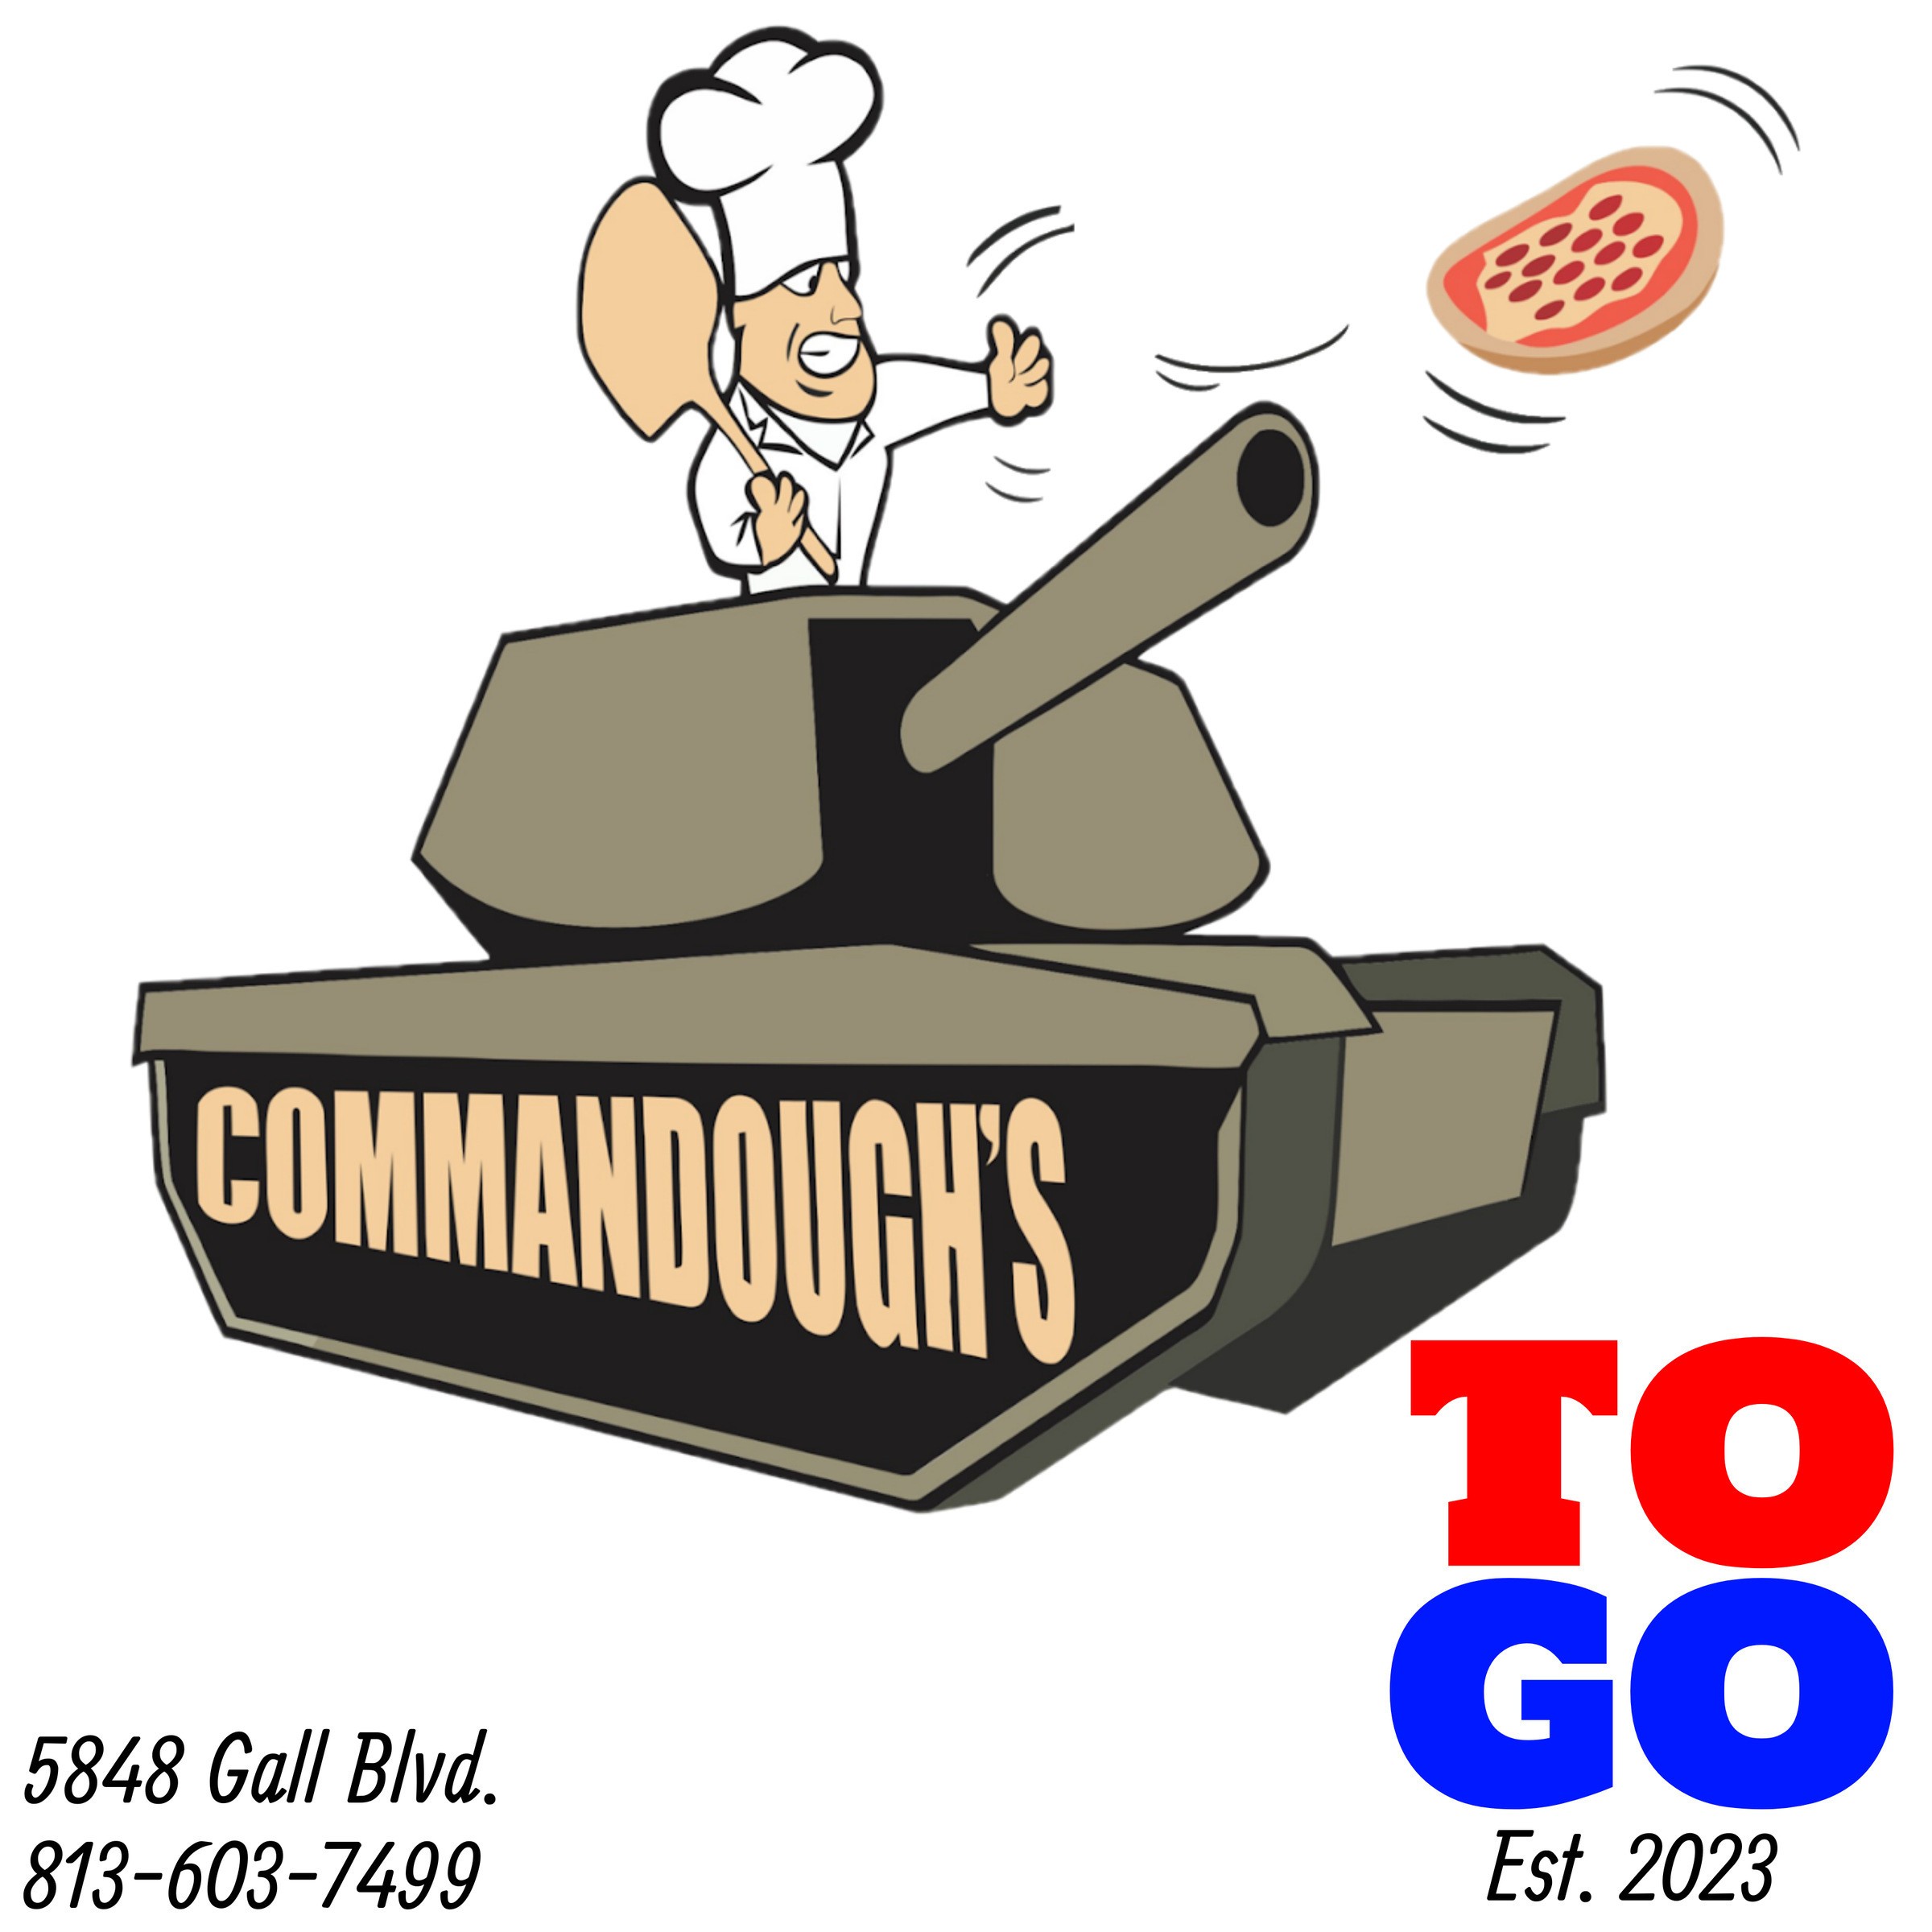 Commandough's Pizza - Take Out Location